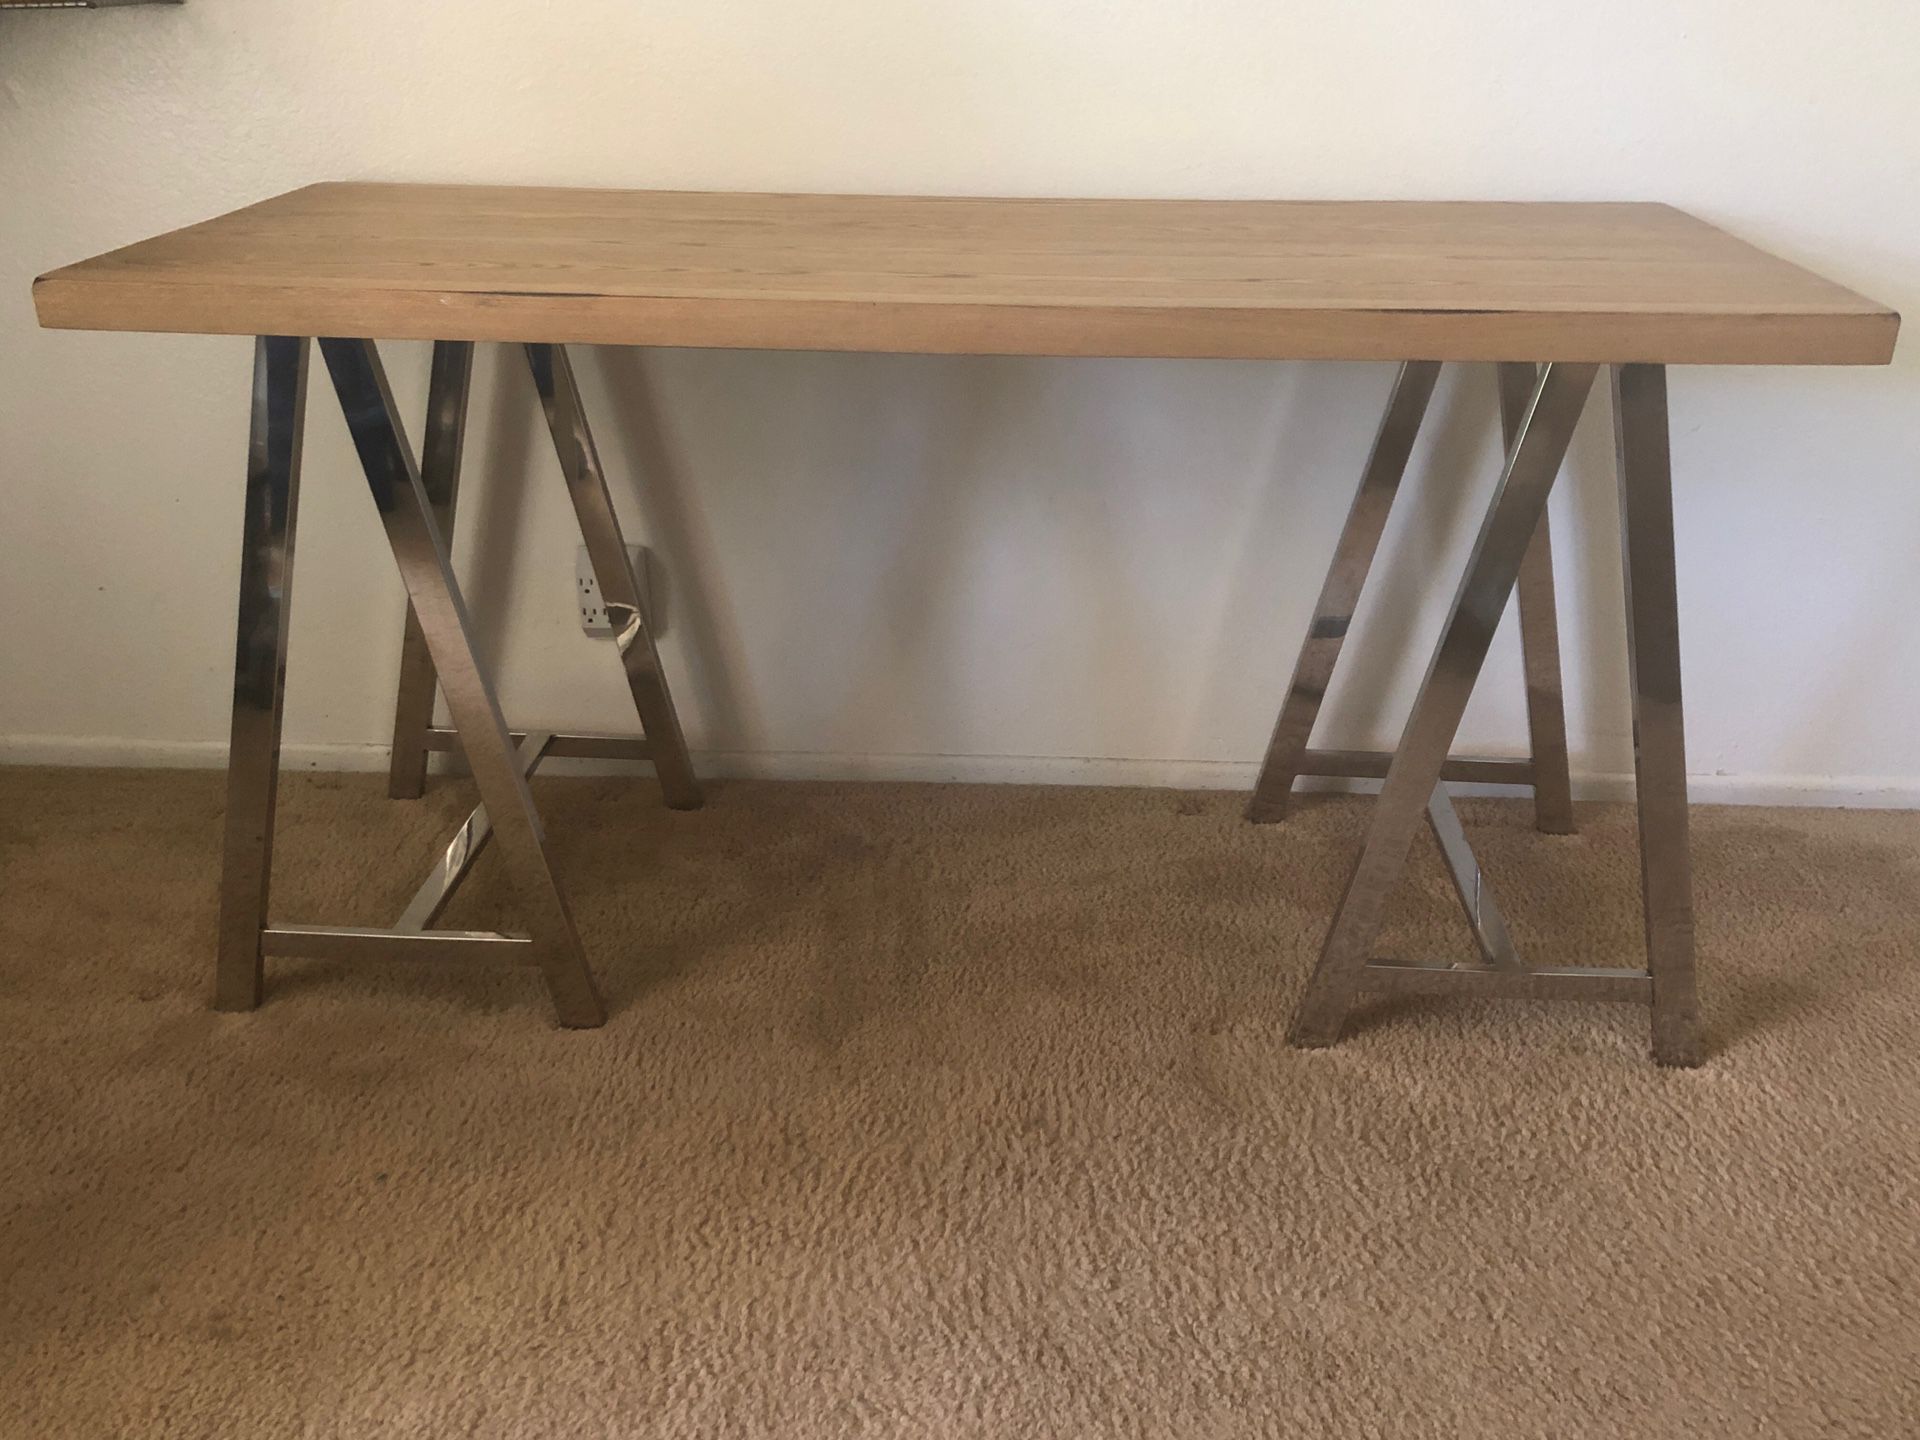 Sleek Chrome-Stand Desk with Wood Top